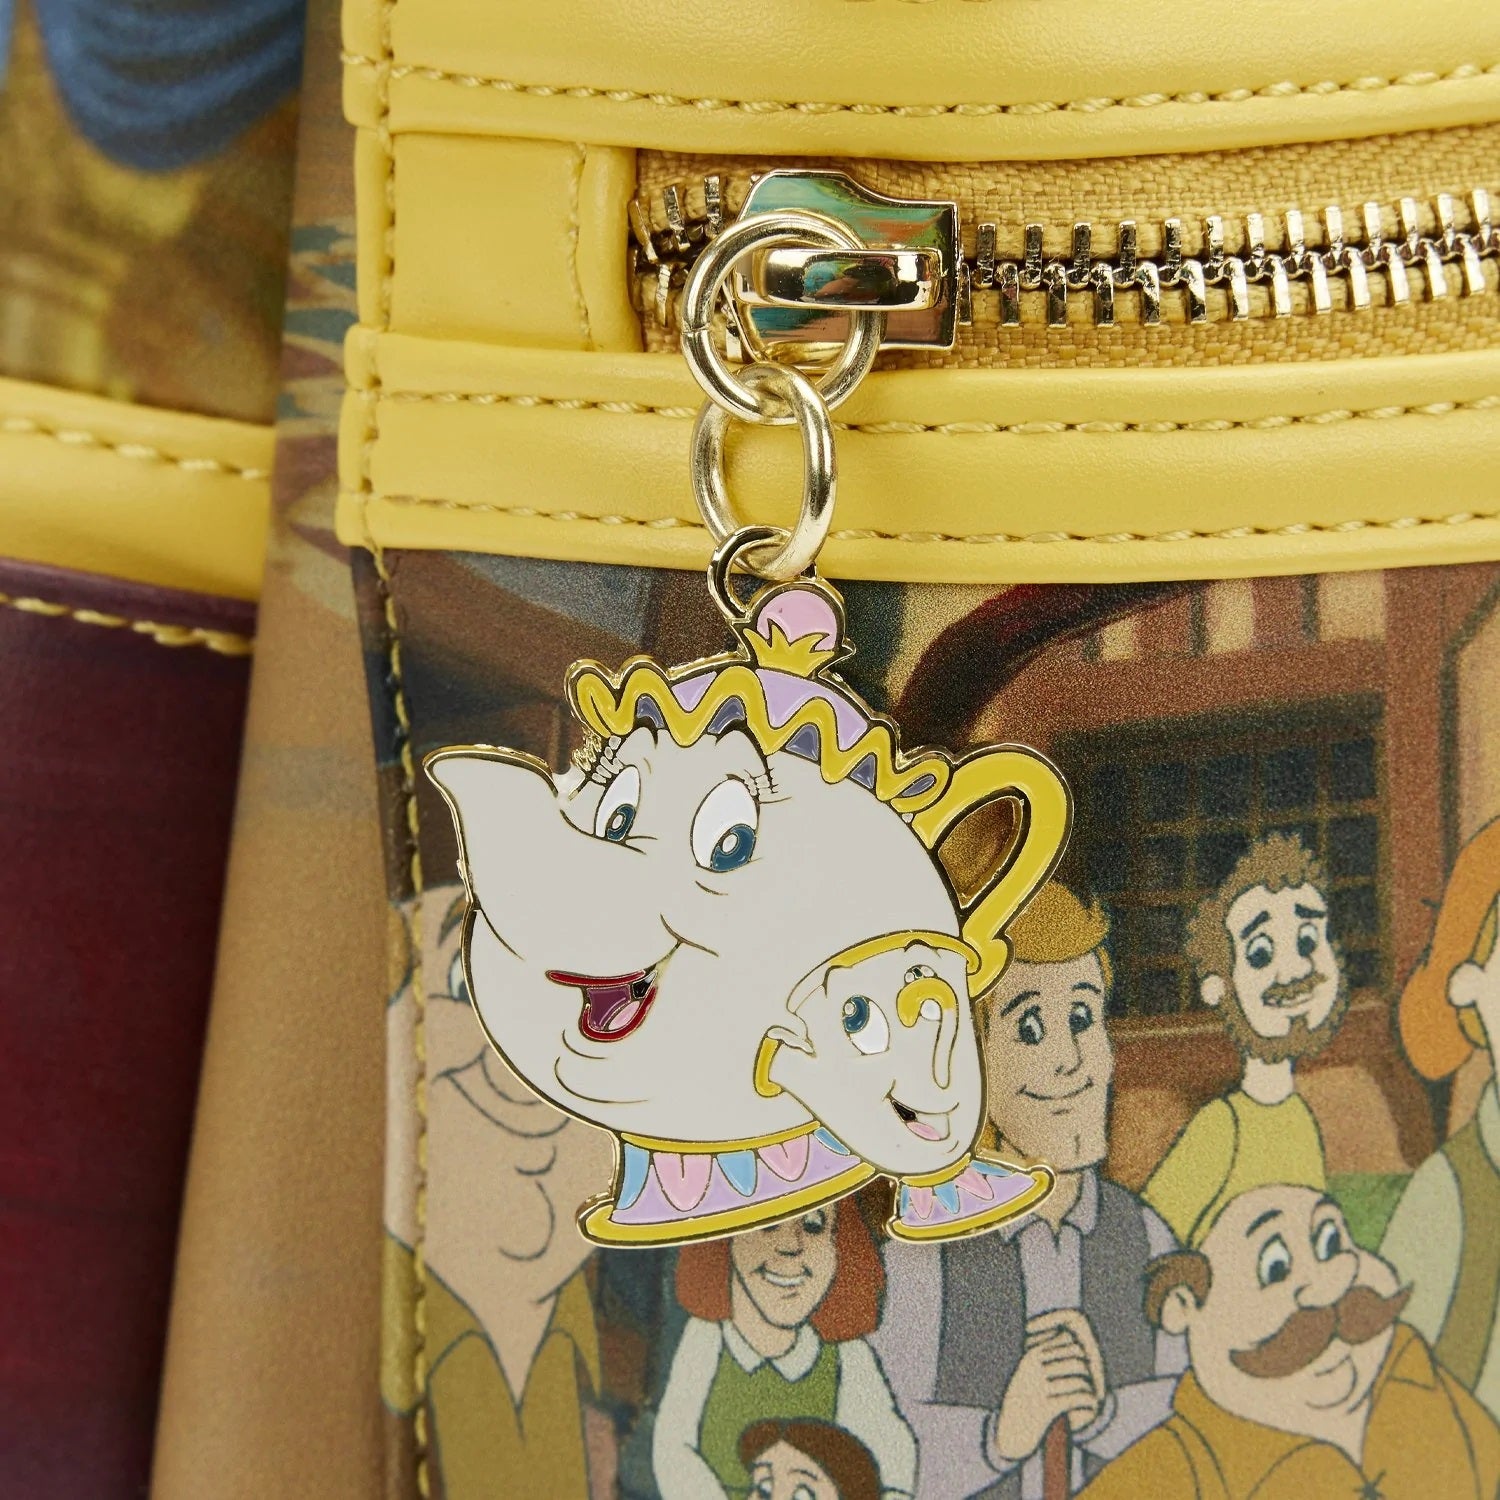 Disney | Beauty and The Beast Princess Scenes Mini Backpack